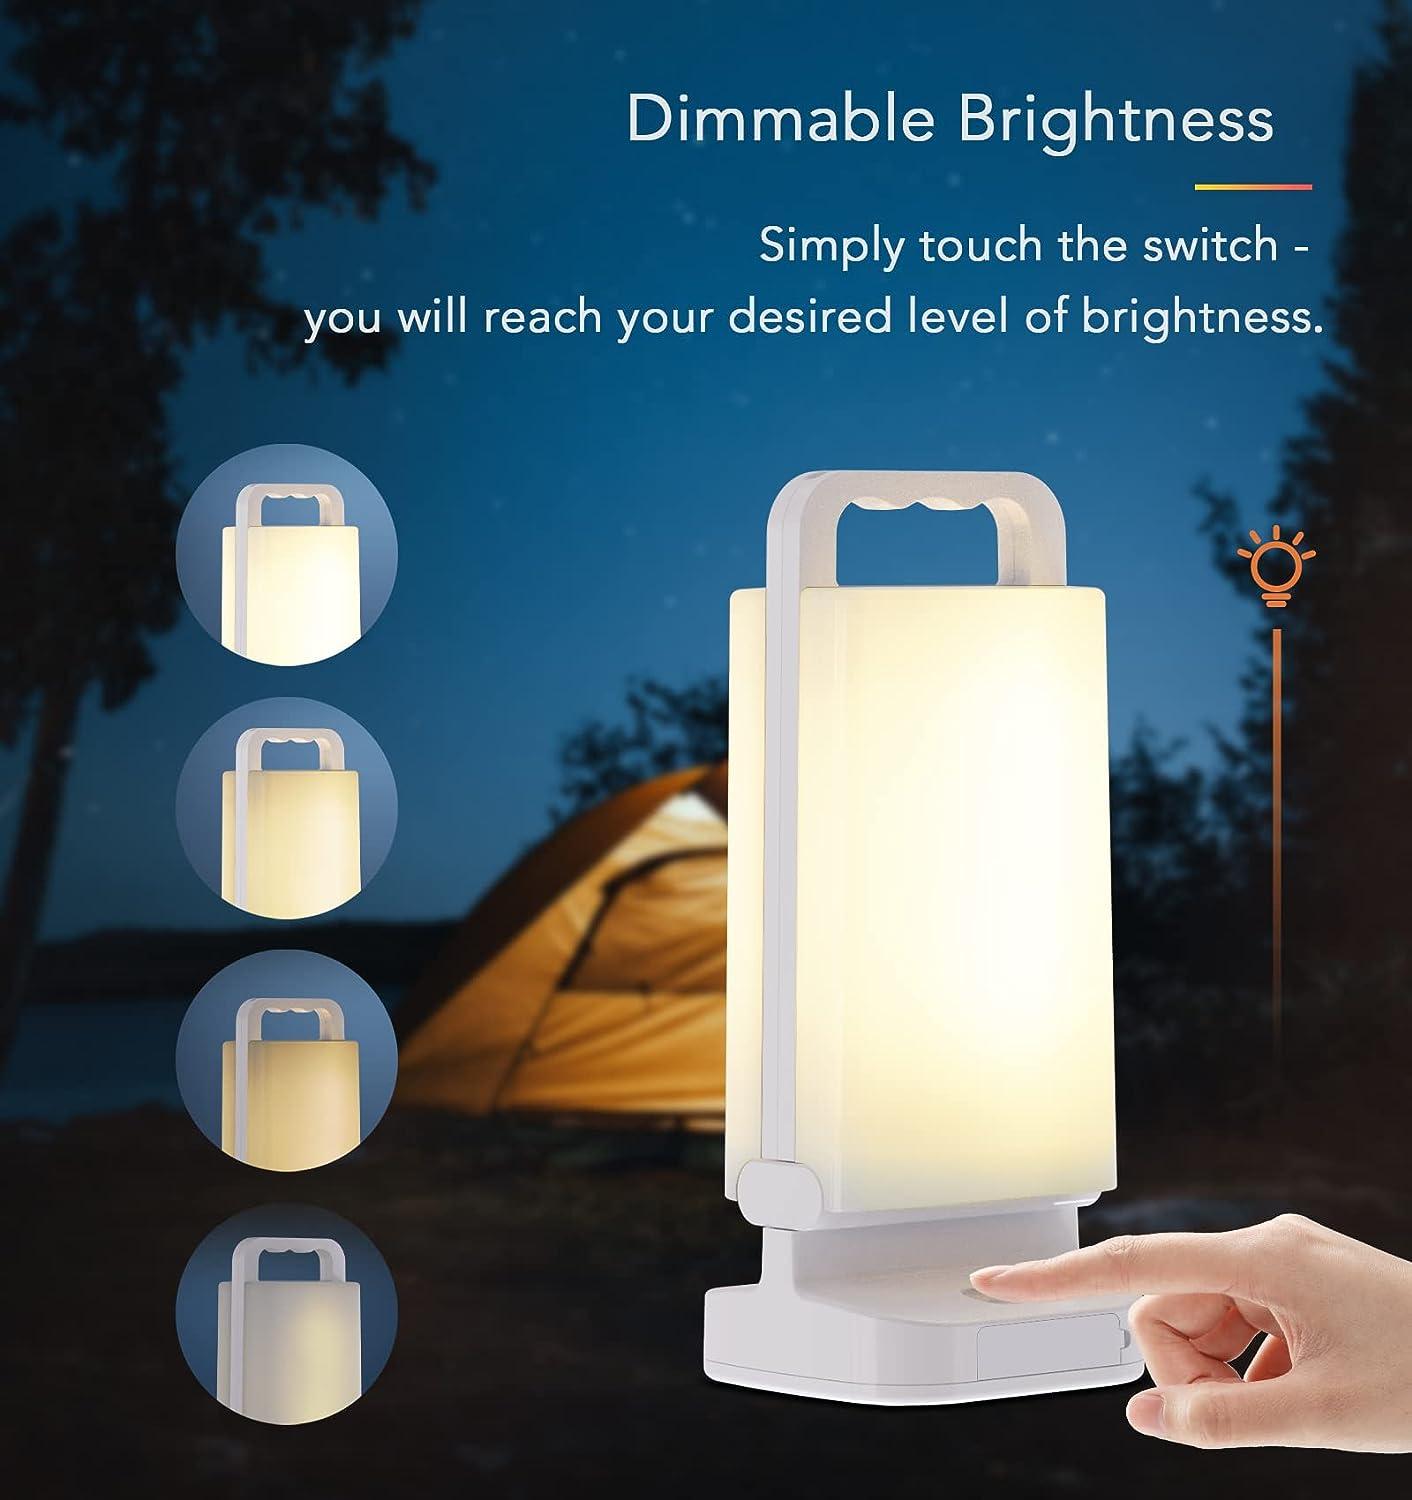 Solar Camping Lantern - LED Powered - Sirius Survival